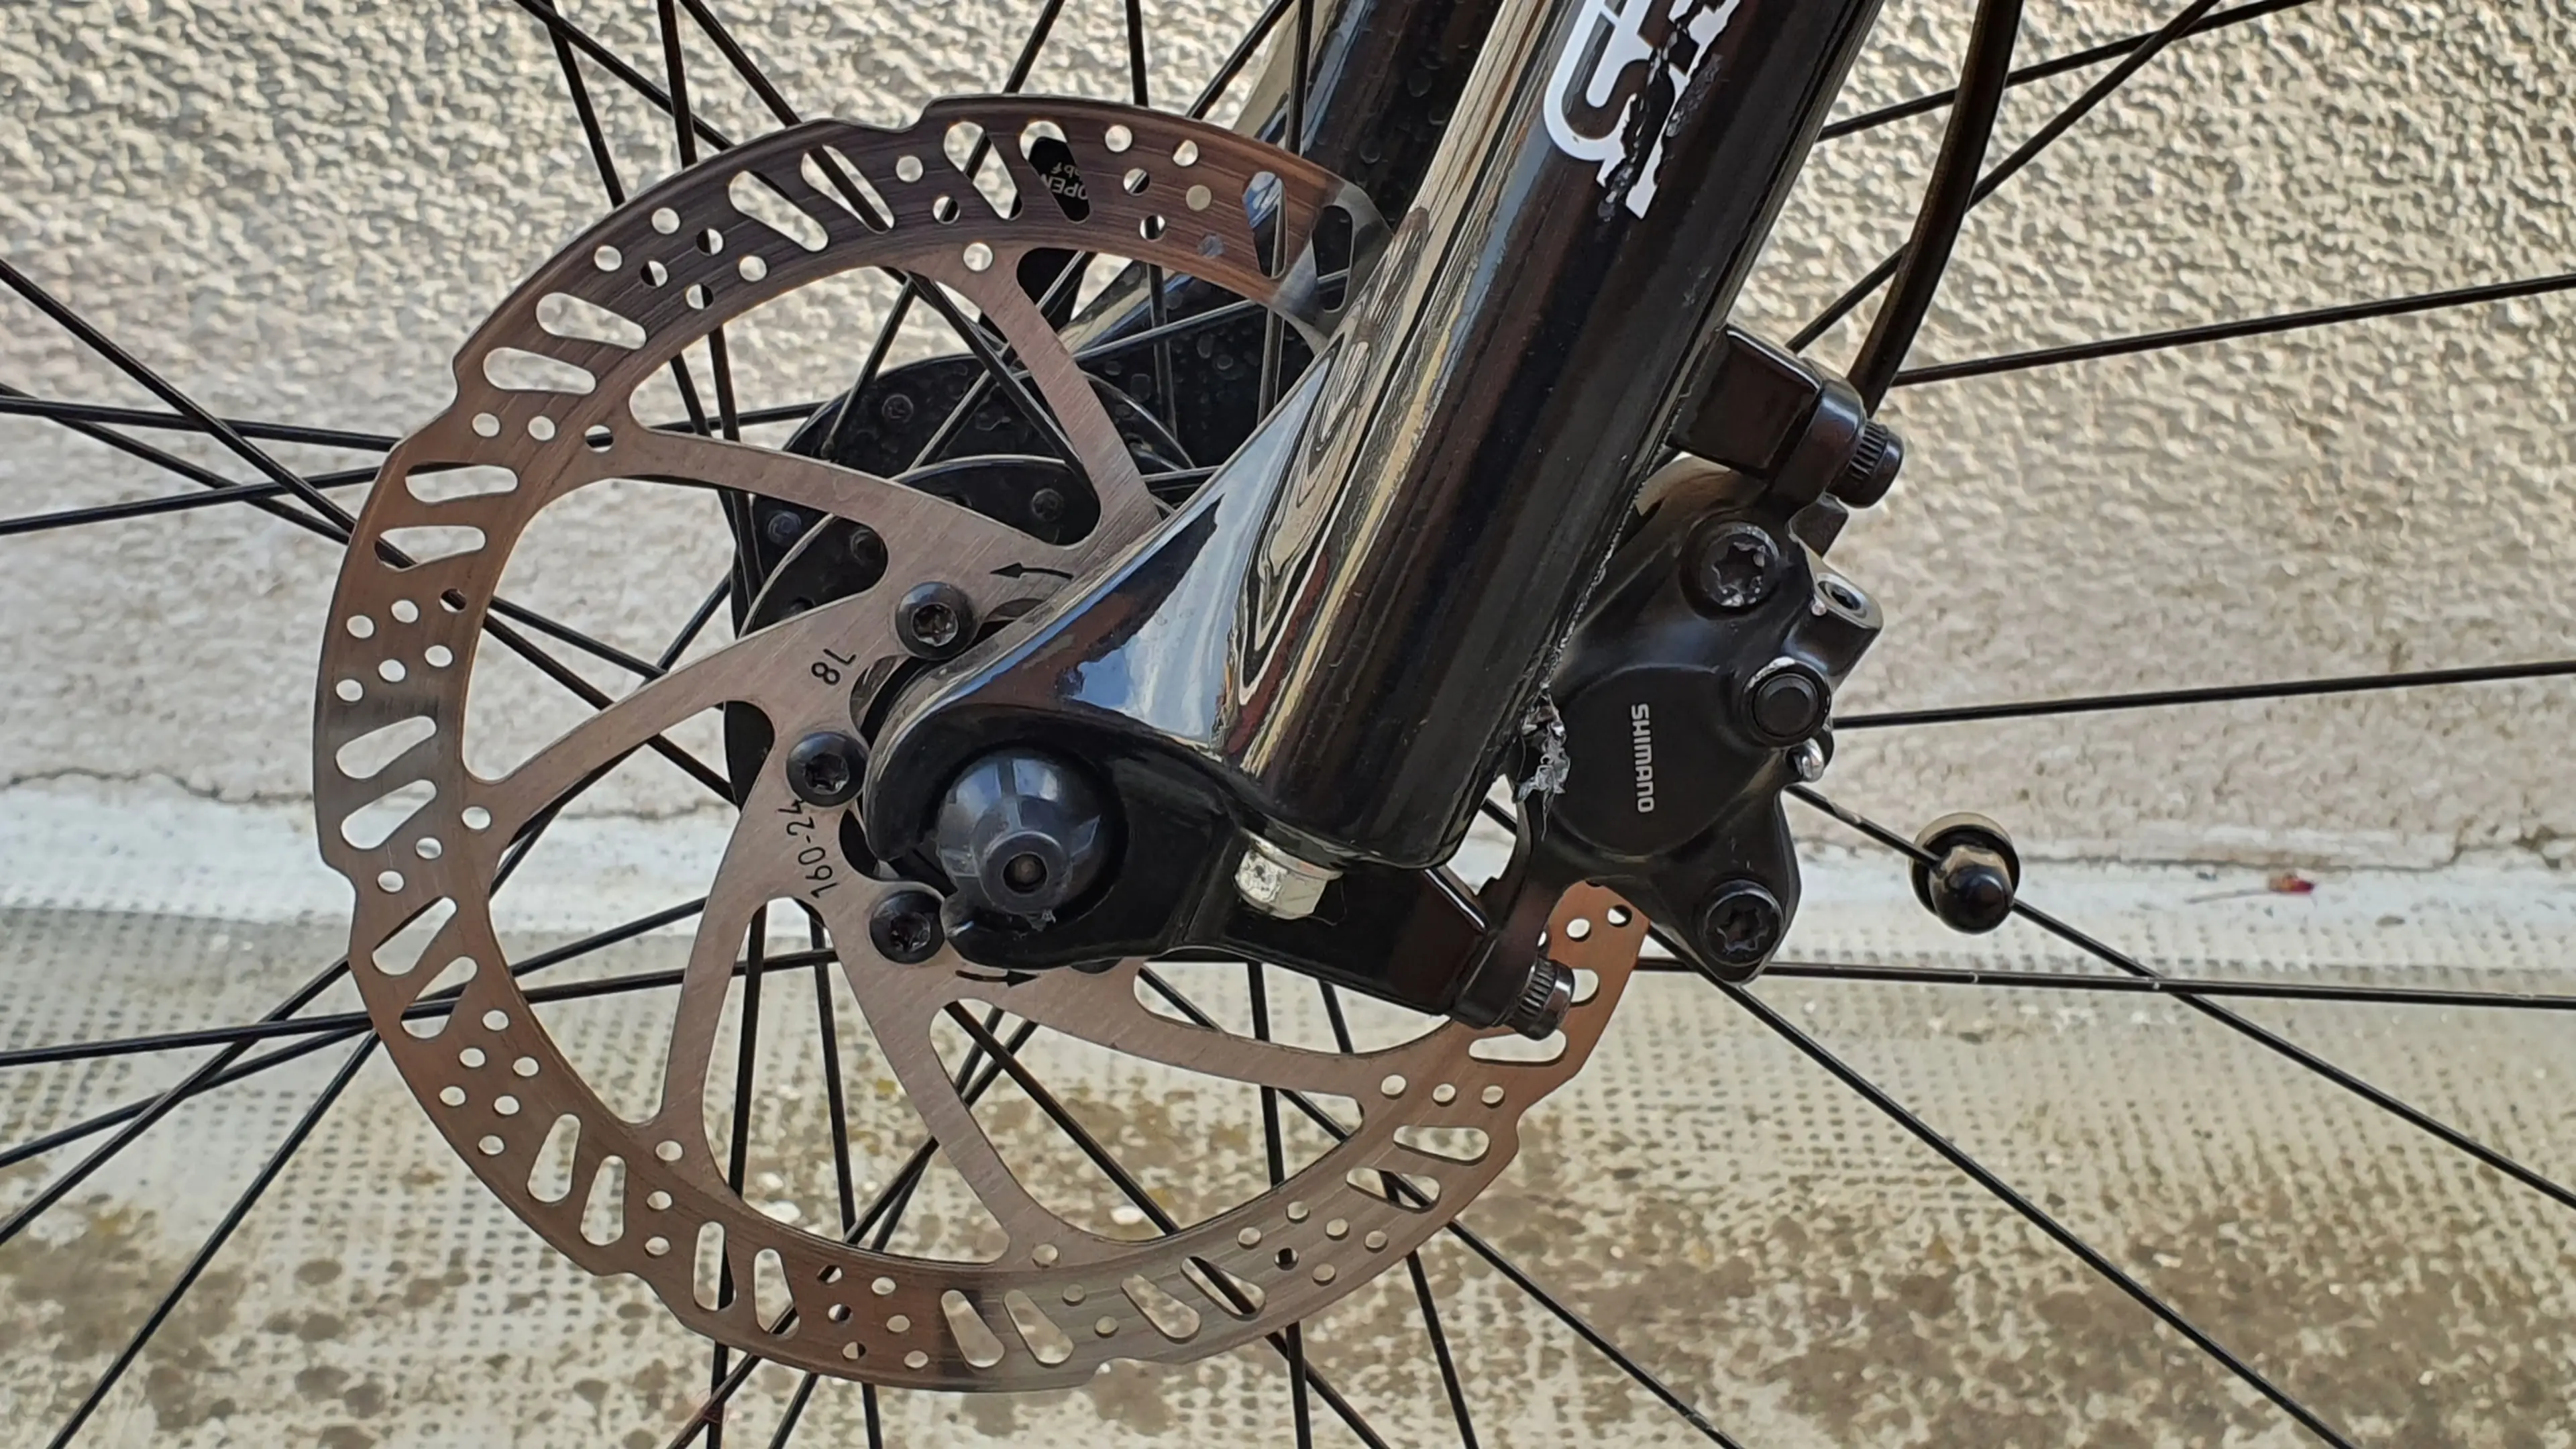 5. Vand Bicicleta Hardtail Devron Riddle M1.9 2019 29"